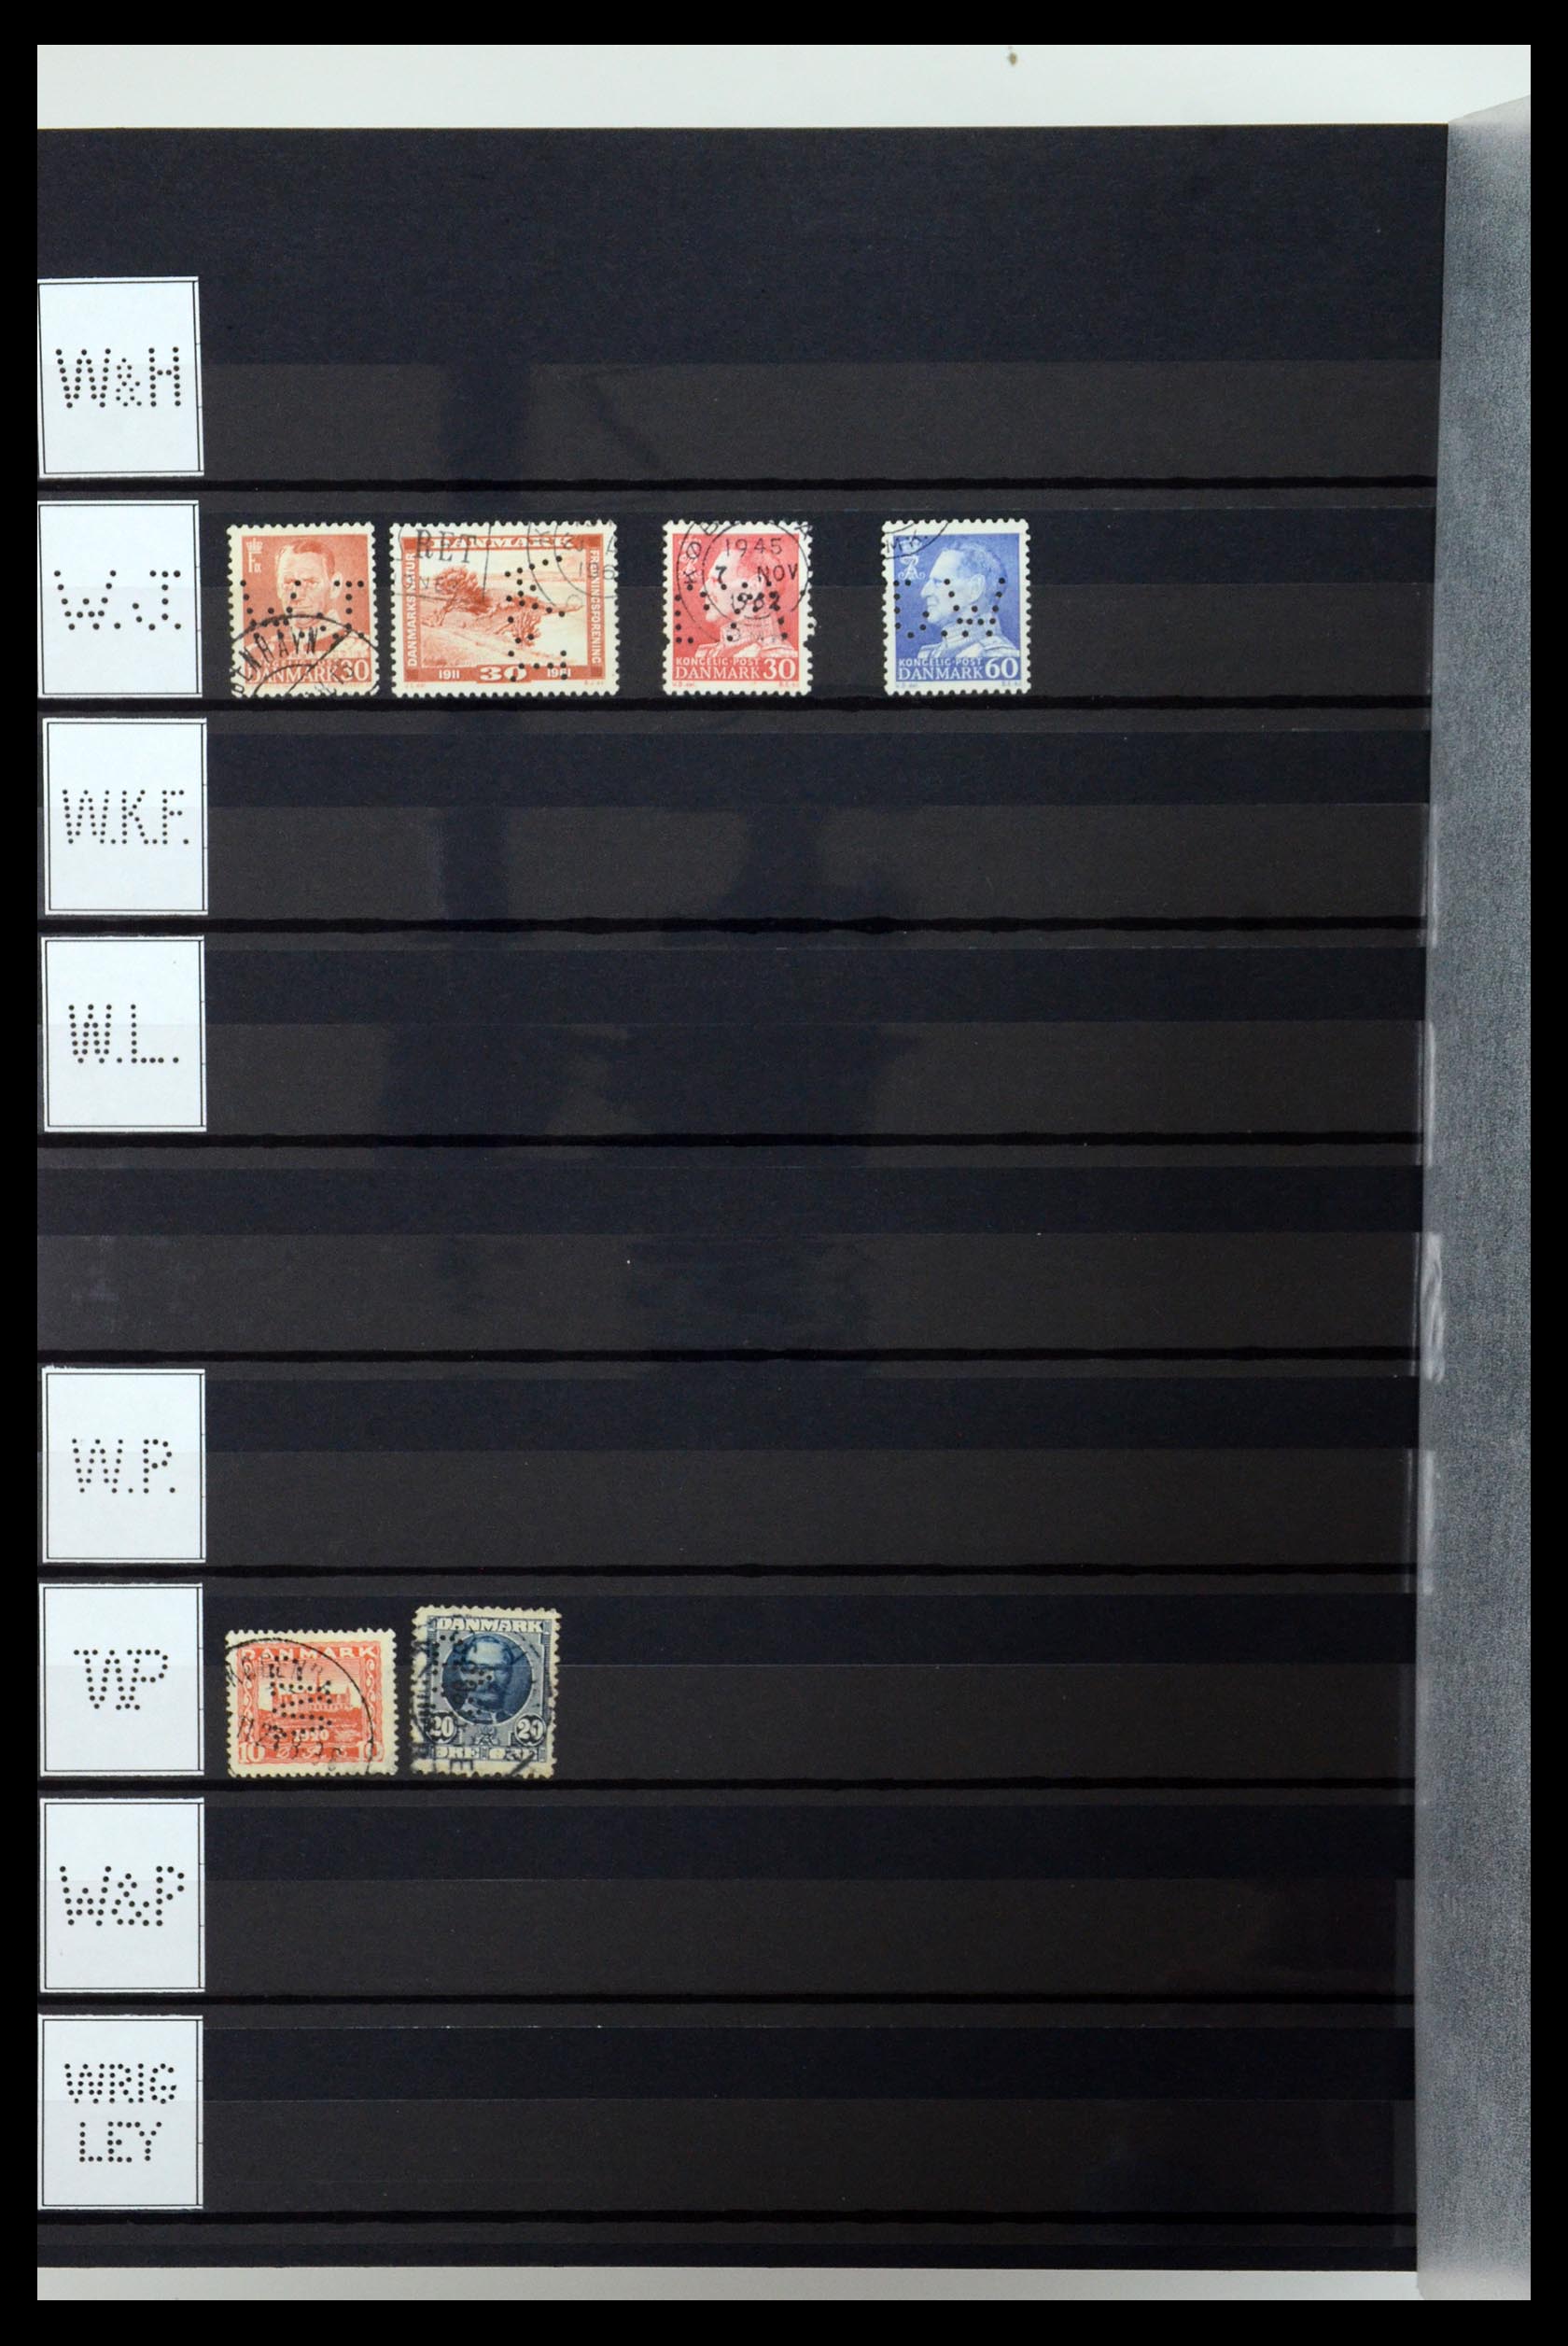 36396 225 - Stamp collection 36396 Denmark perfins.